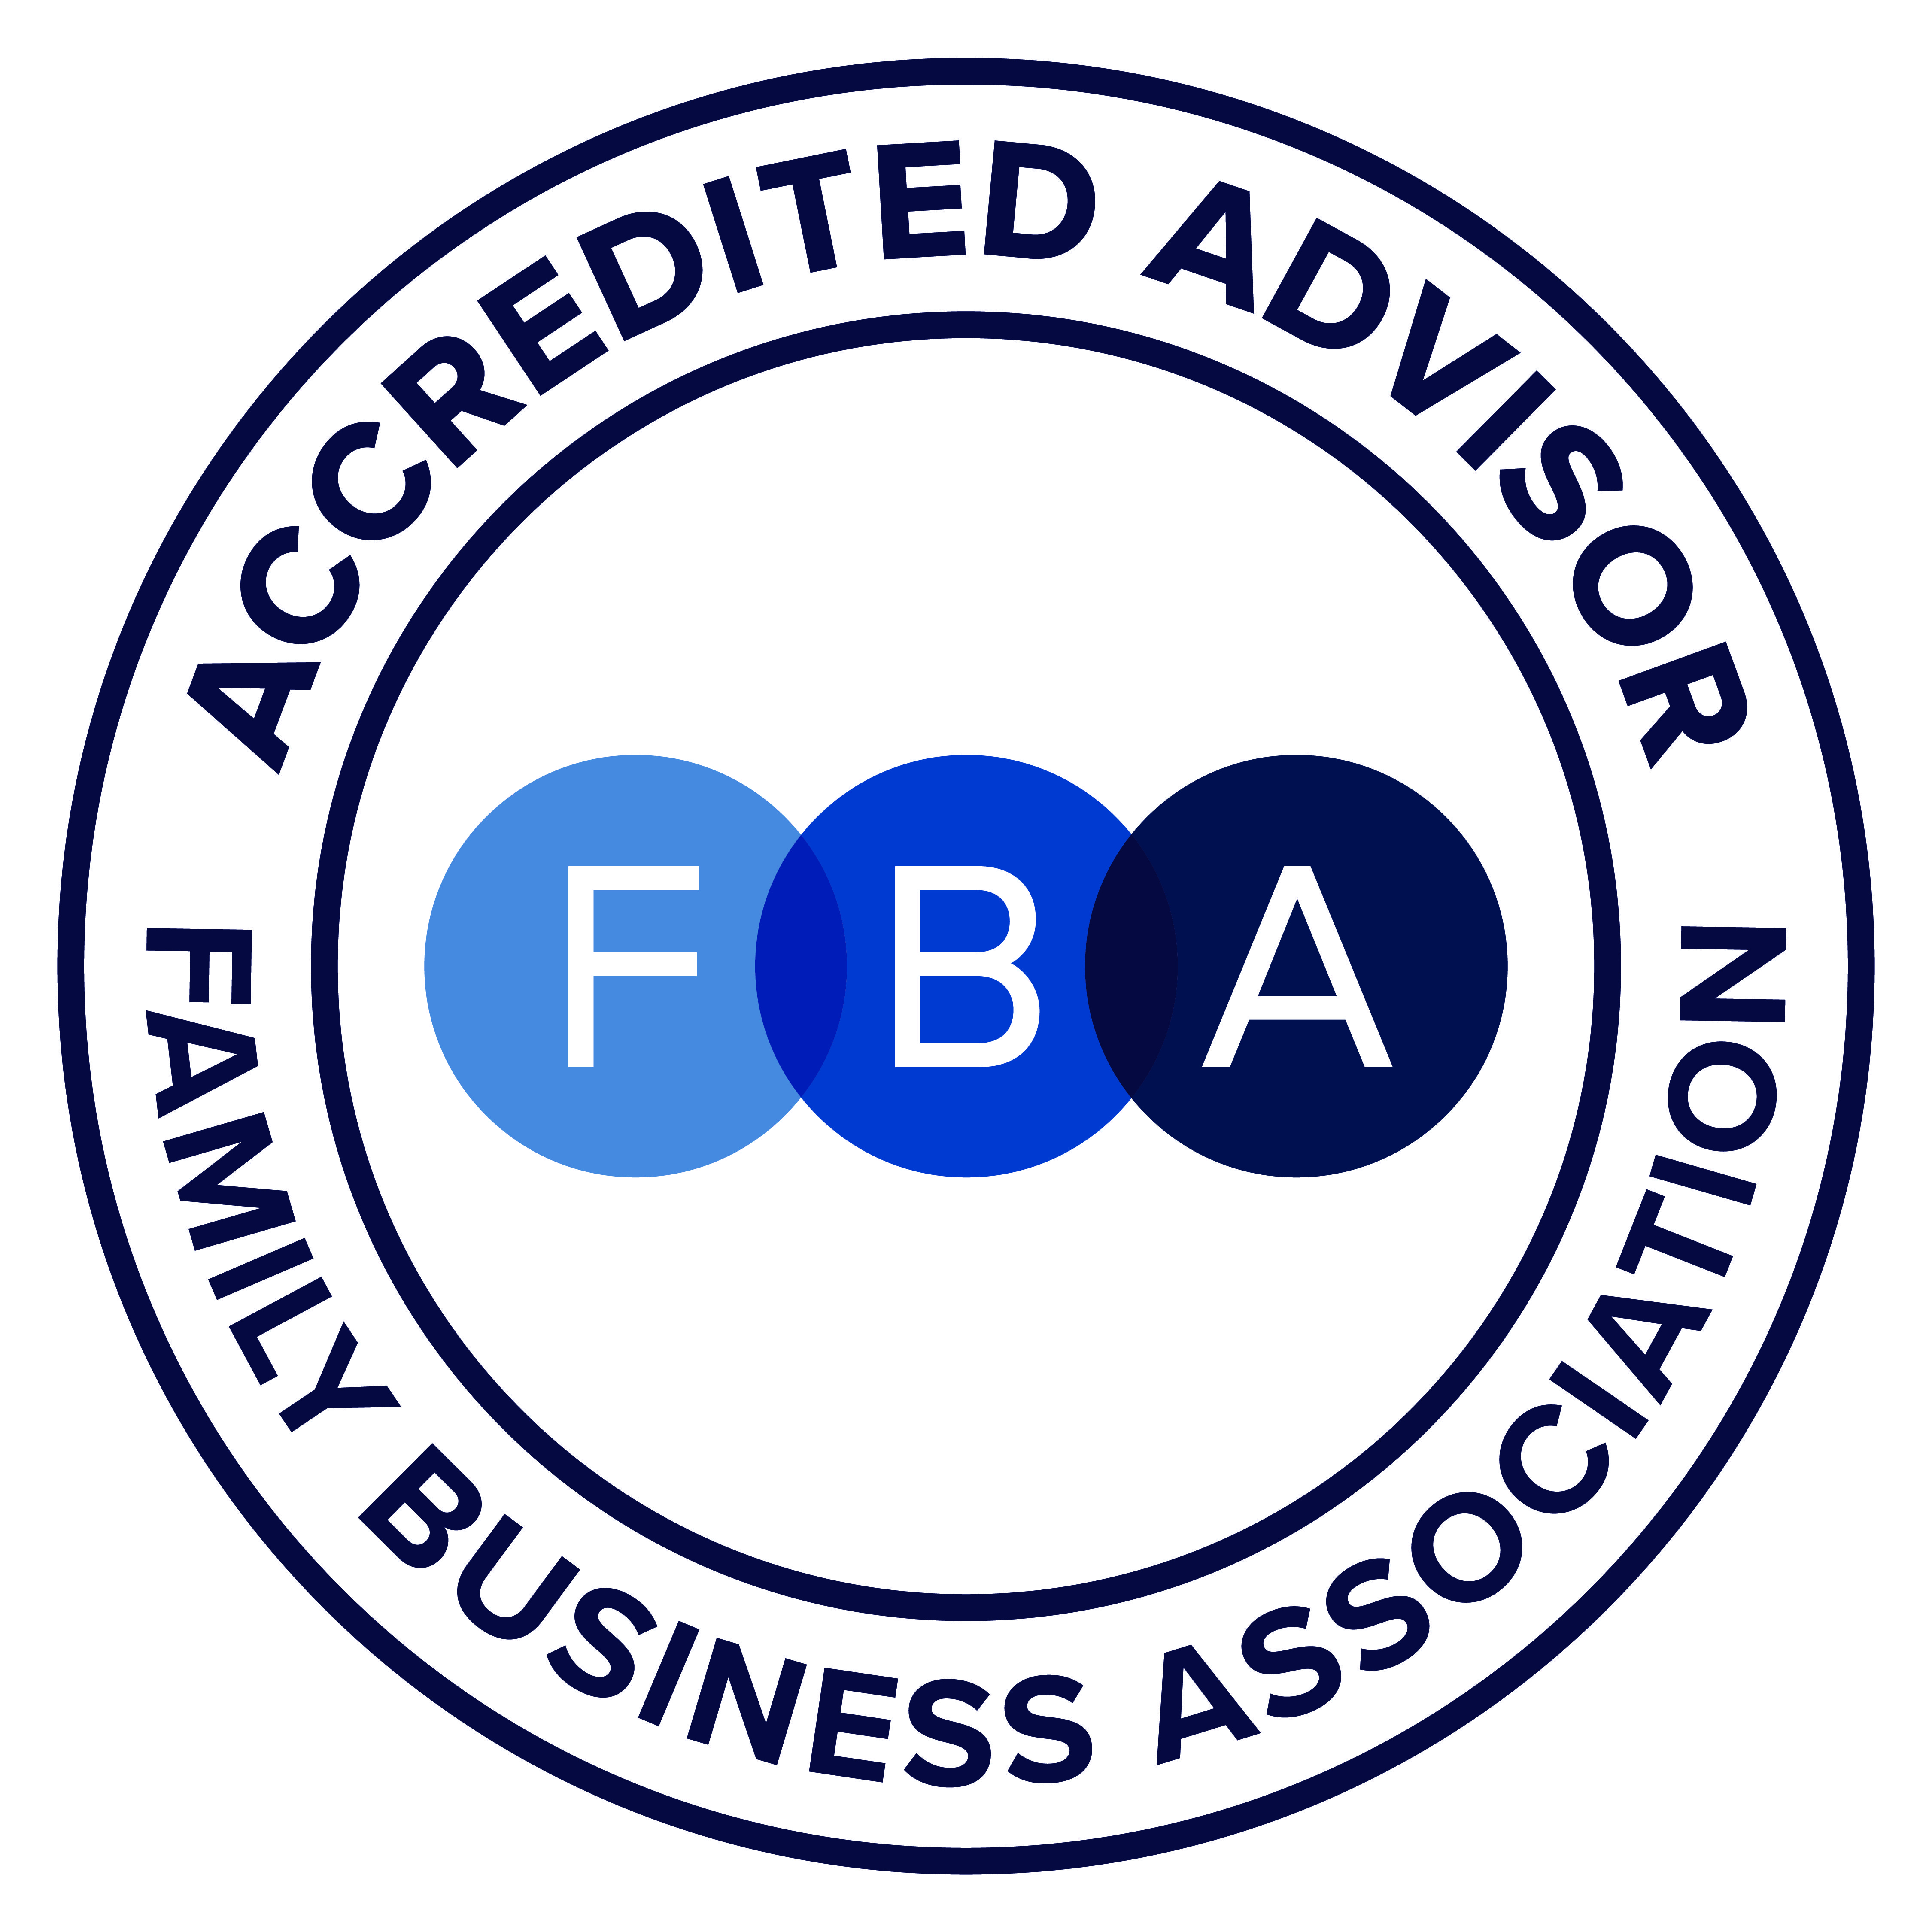 family business association accredited advisor logo